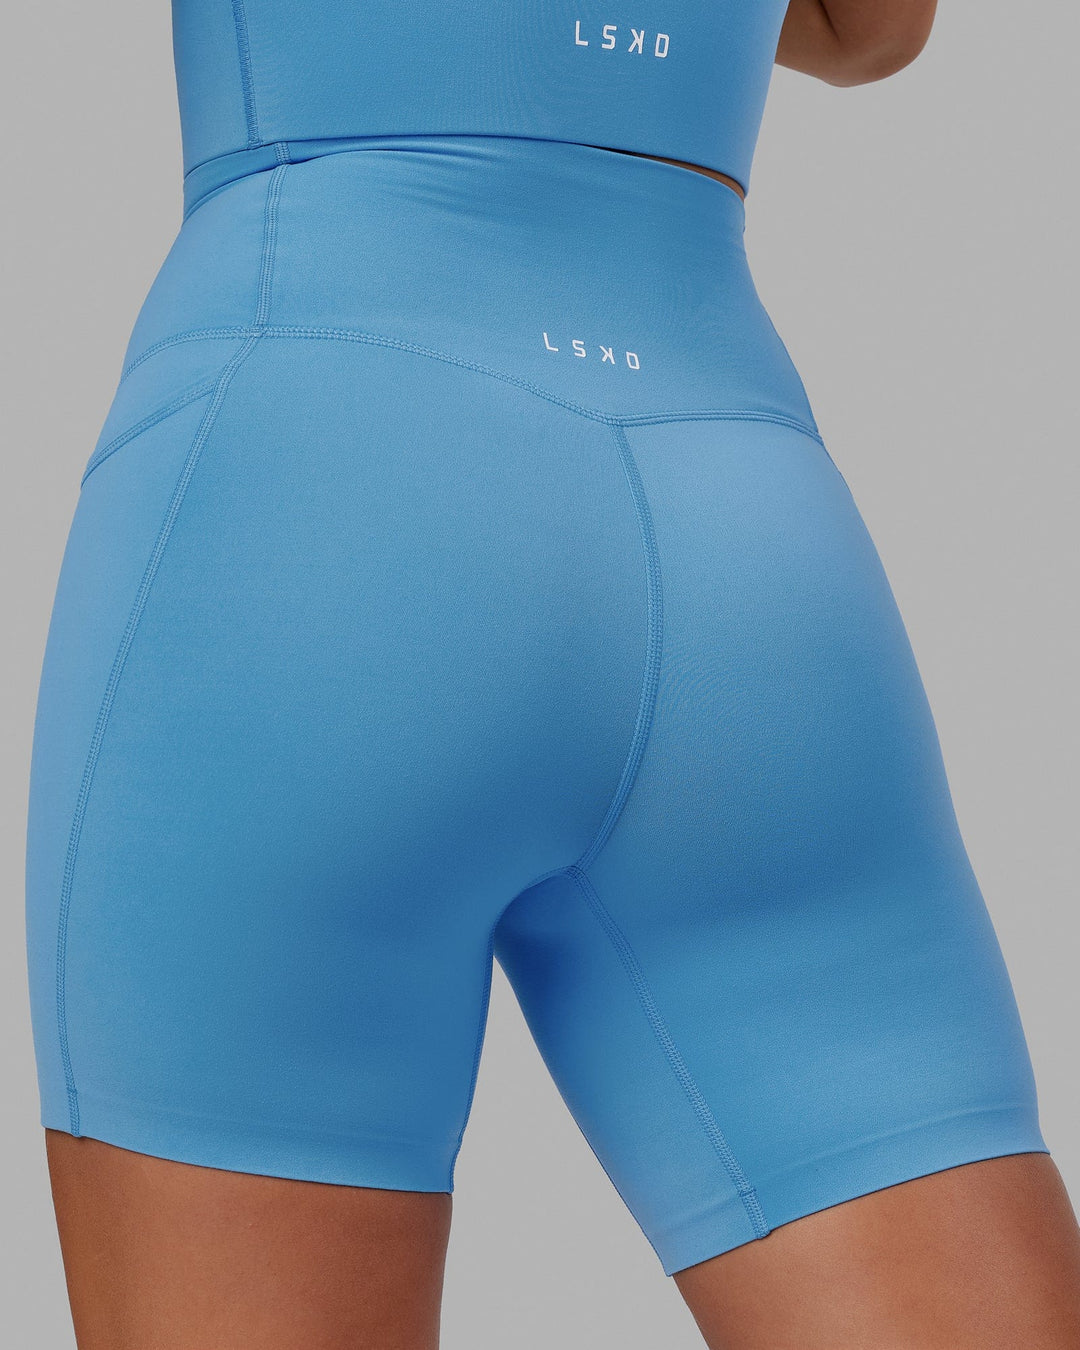 Elixir Mid-Length Shorts With Pockets - Azure Blue